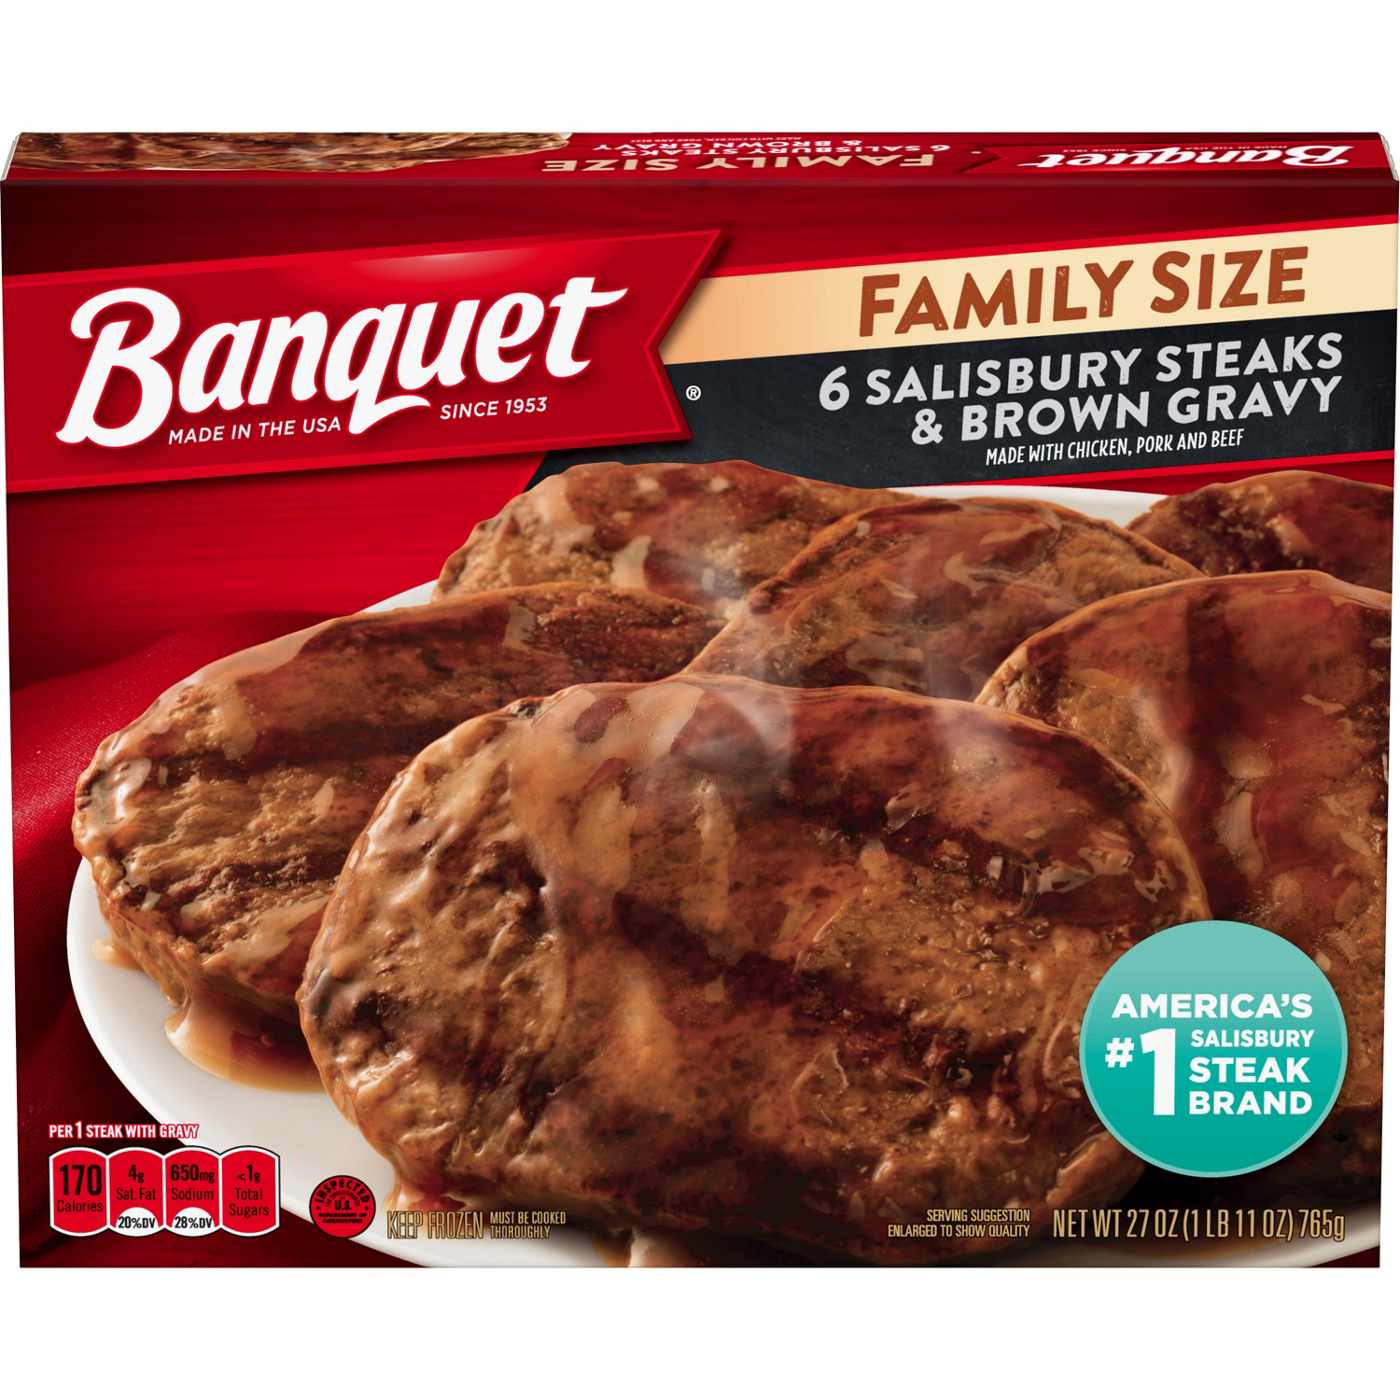 Banquet Frozen Salisbury Steaks & Brown Gravy - Family Size; image 1 of 5